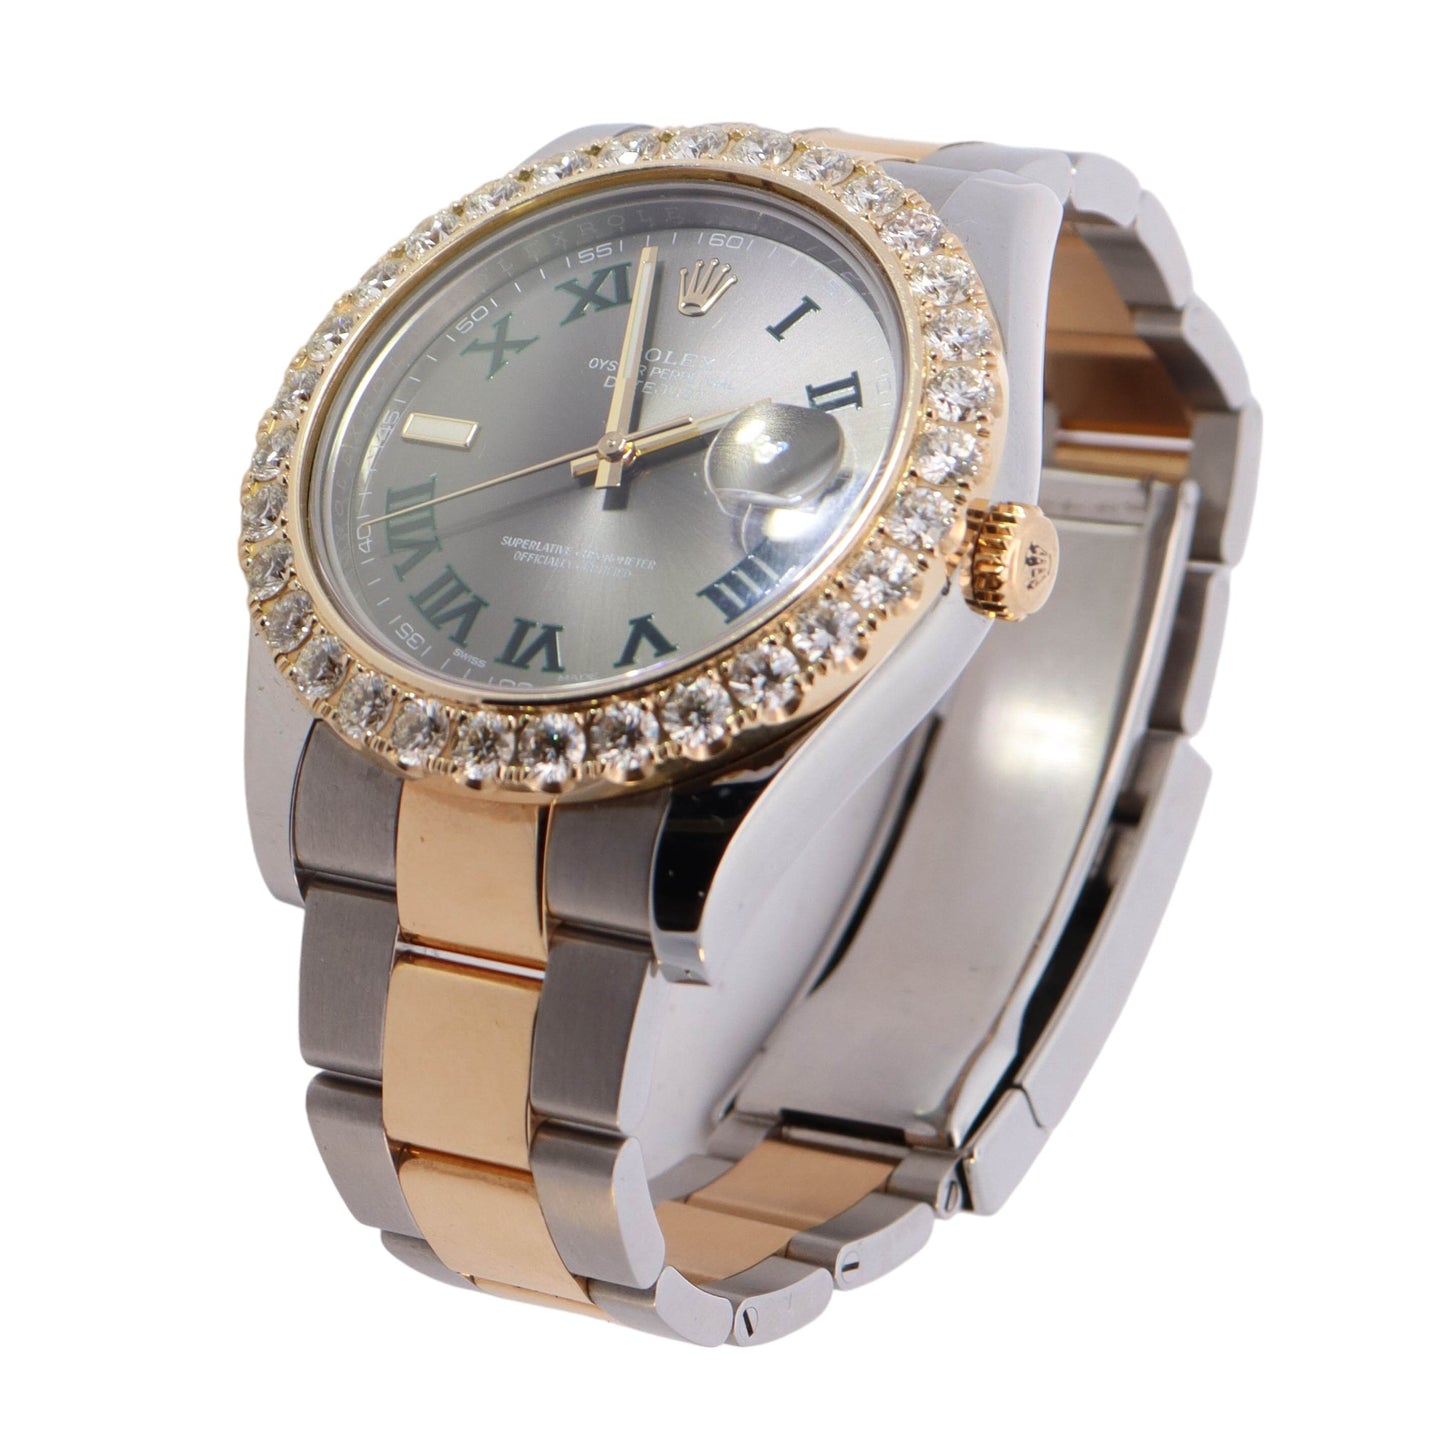 Rolex Datejust II Two-Tone Stainless Steel & Yellow Gold 41mm Wimbledon Roman Dial Watch   Reference #: 116333 - Happy Jewelers Fine Jewelry Lifetime Warranty